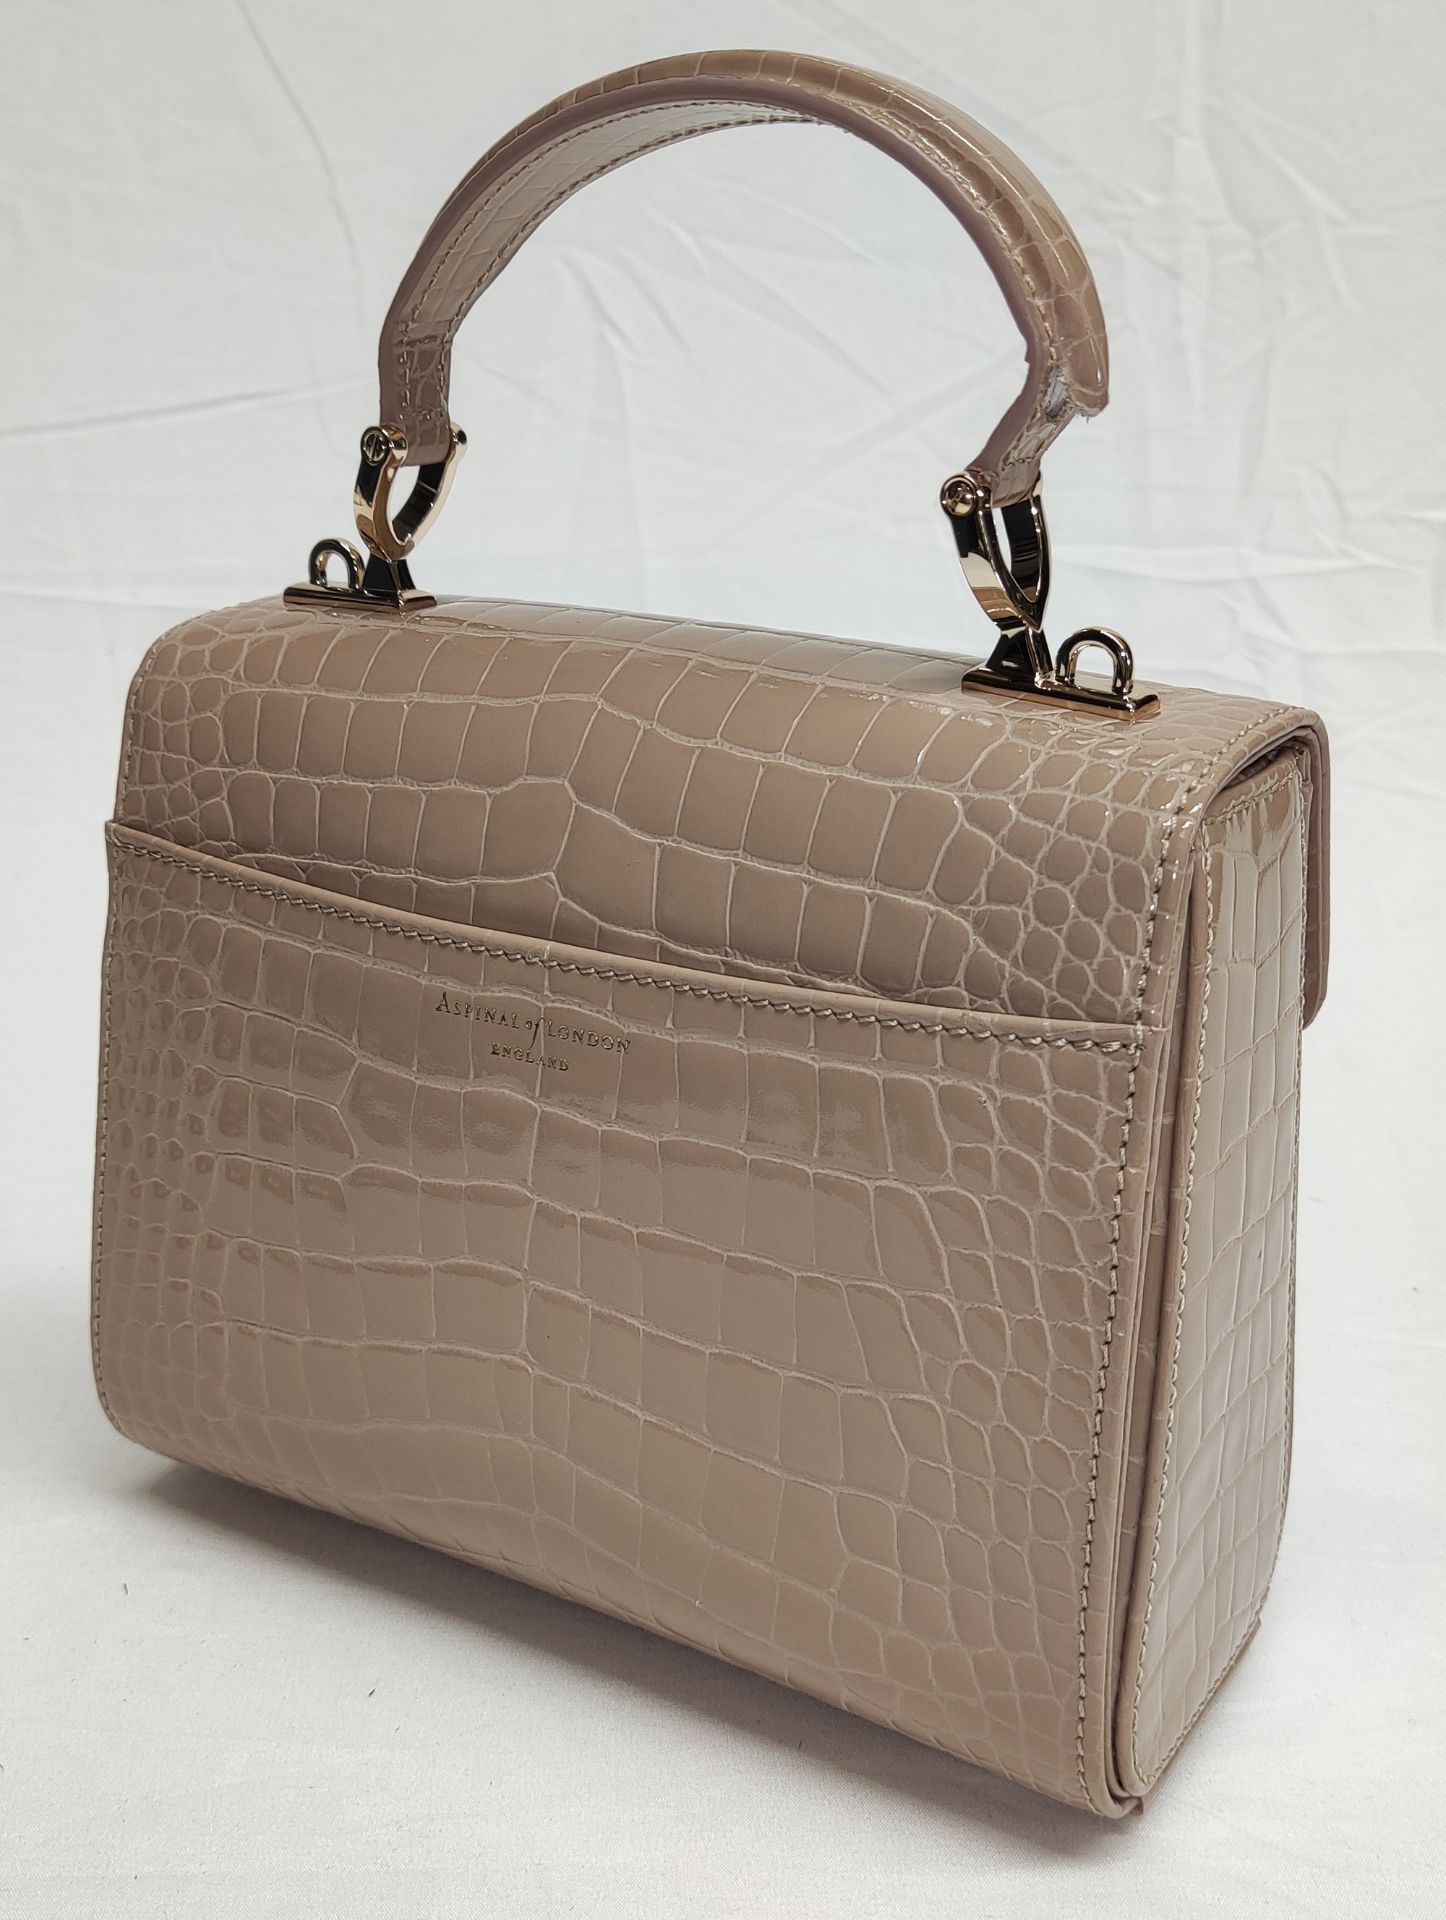 1 x ASPINAL OF LONDON Mayfair Midi Bag In Small Croc Pattern - Boxed - Original RRP £595 - Ref: - Image 4 of 22